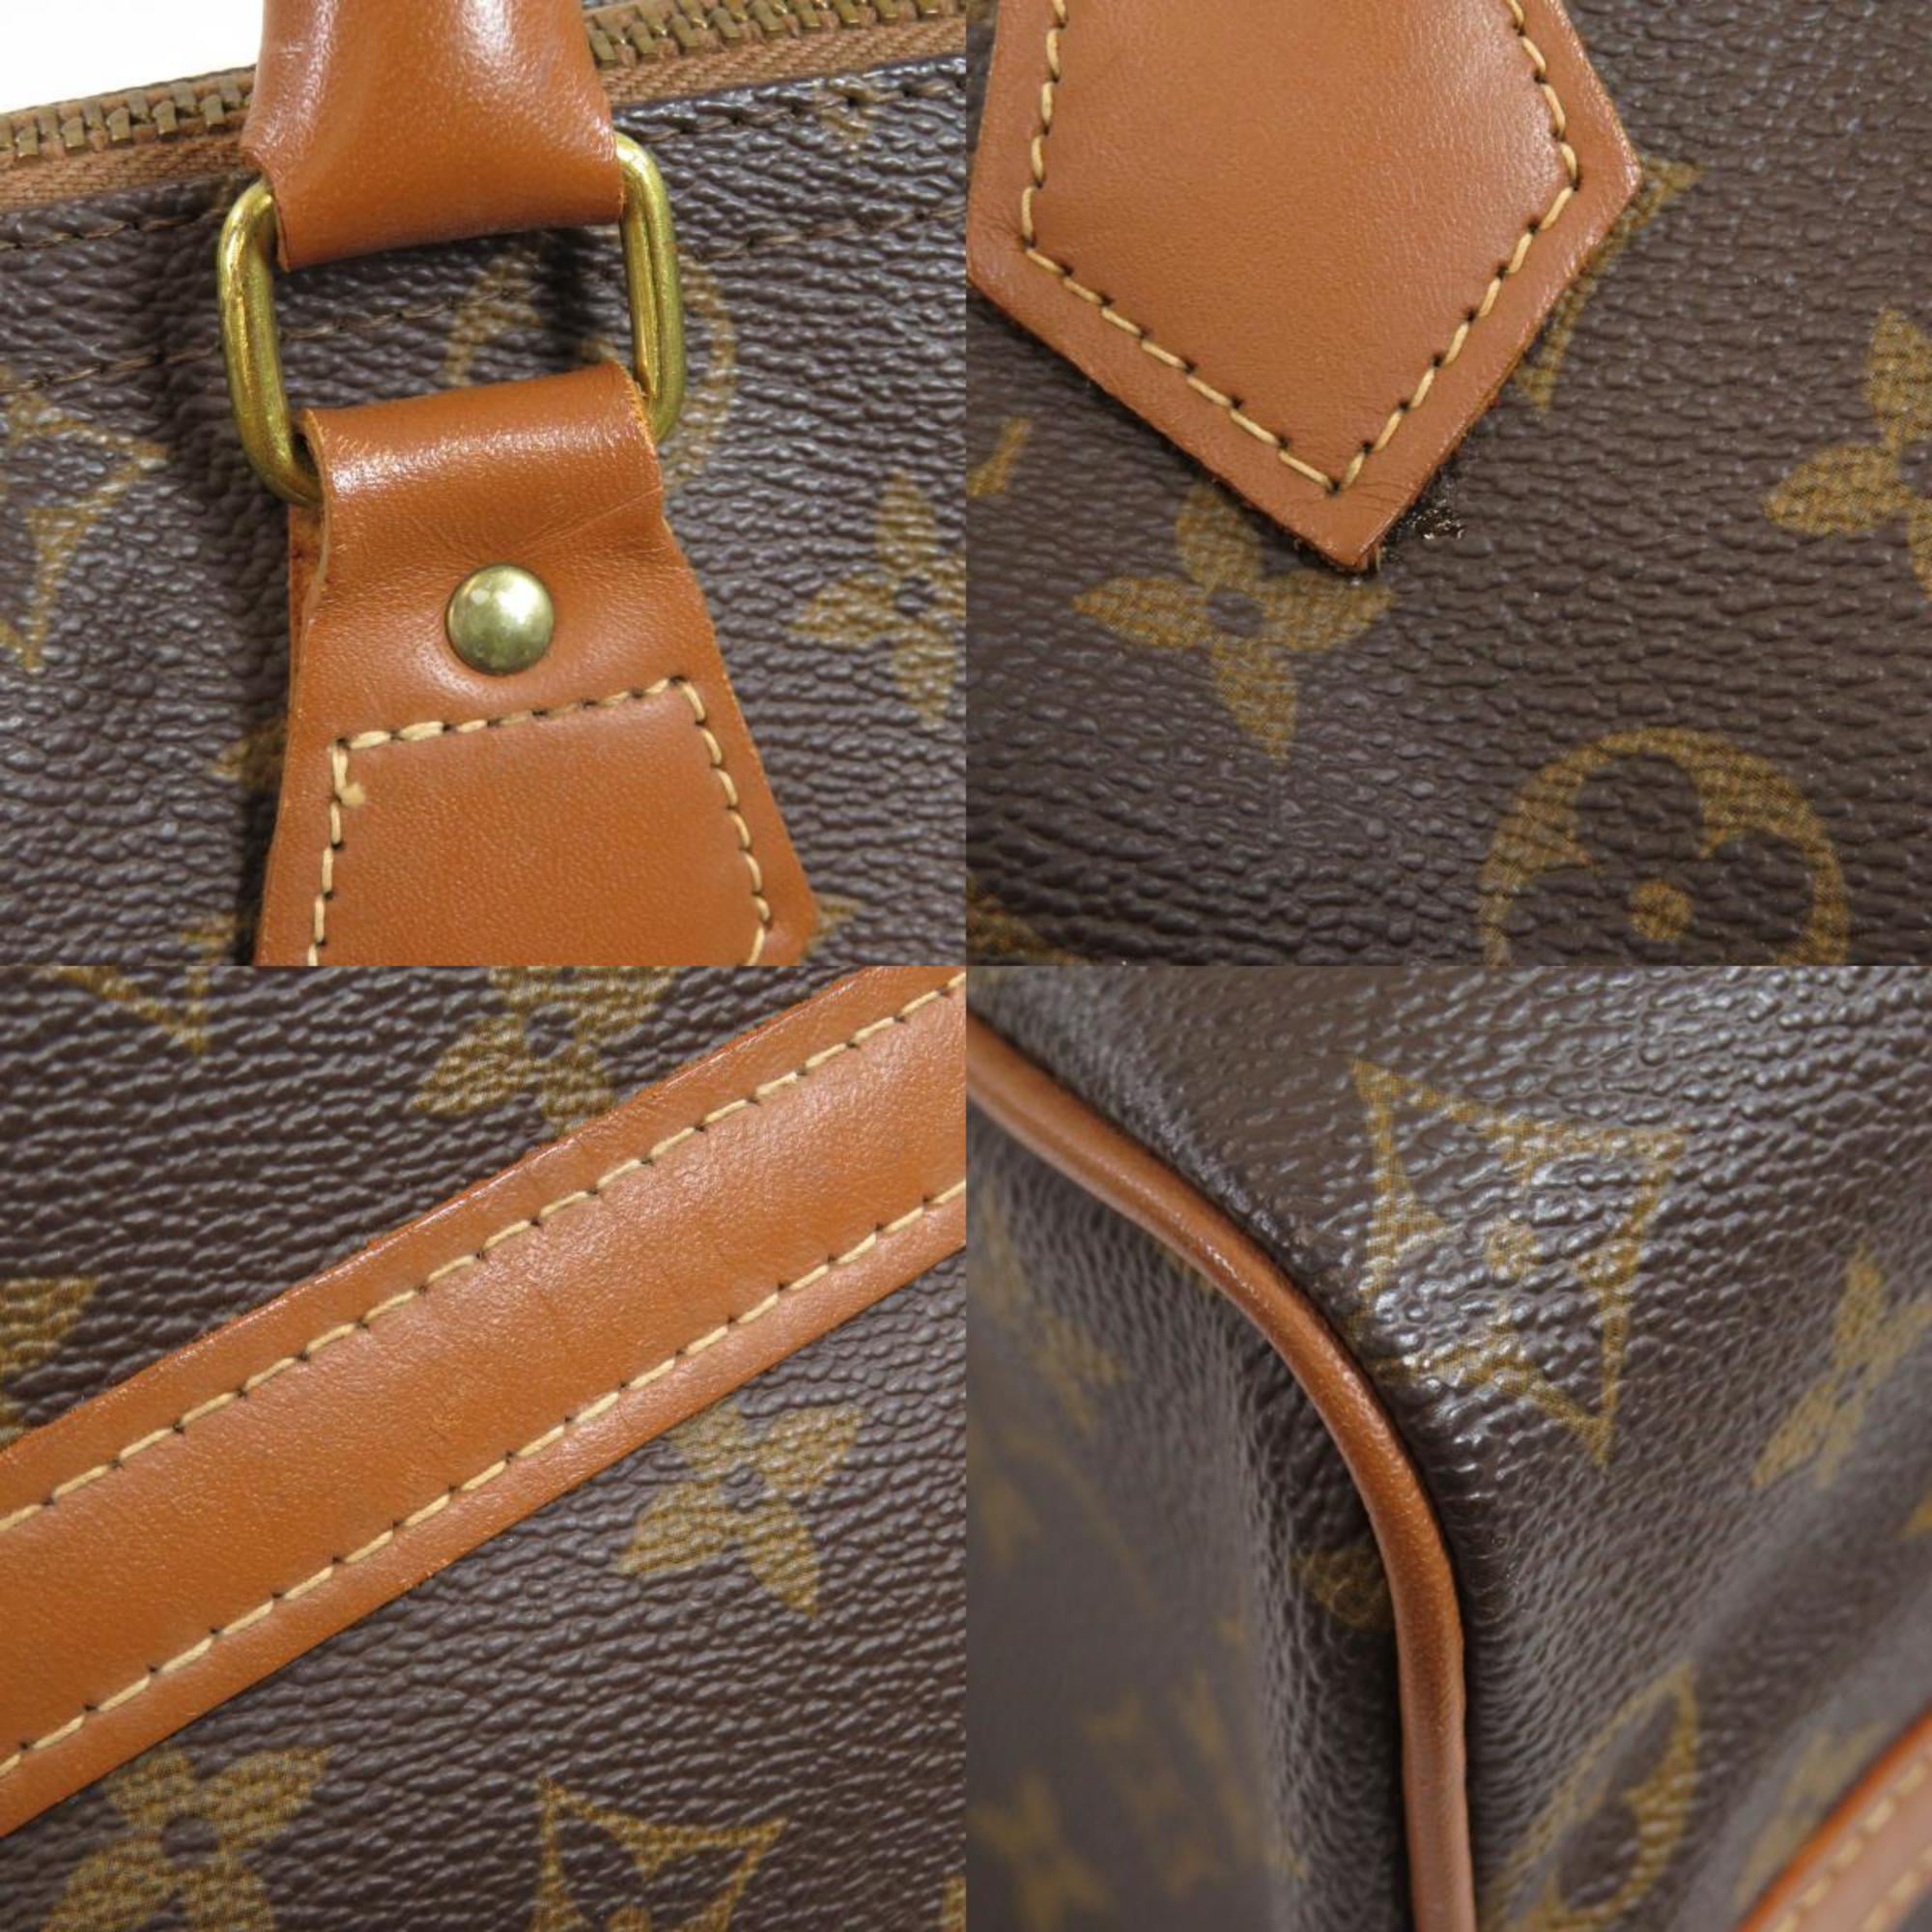 Preloved Authentic Louis Vuitton Monogram Speedy 25 Boston Hand Bag Purse  SP0954